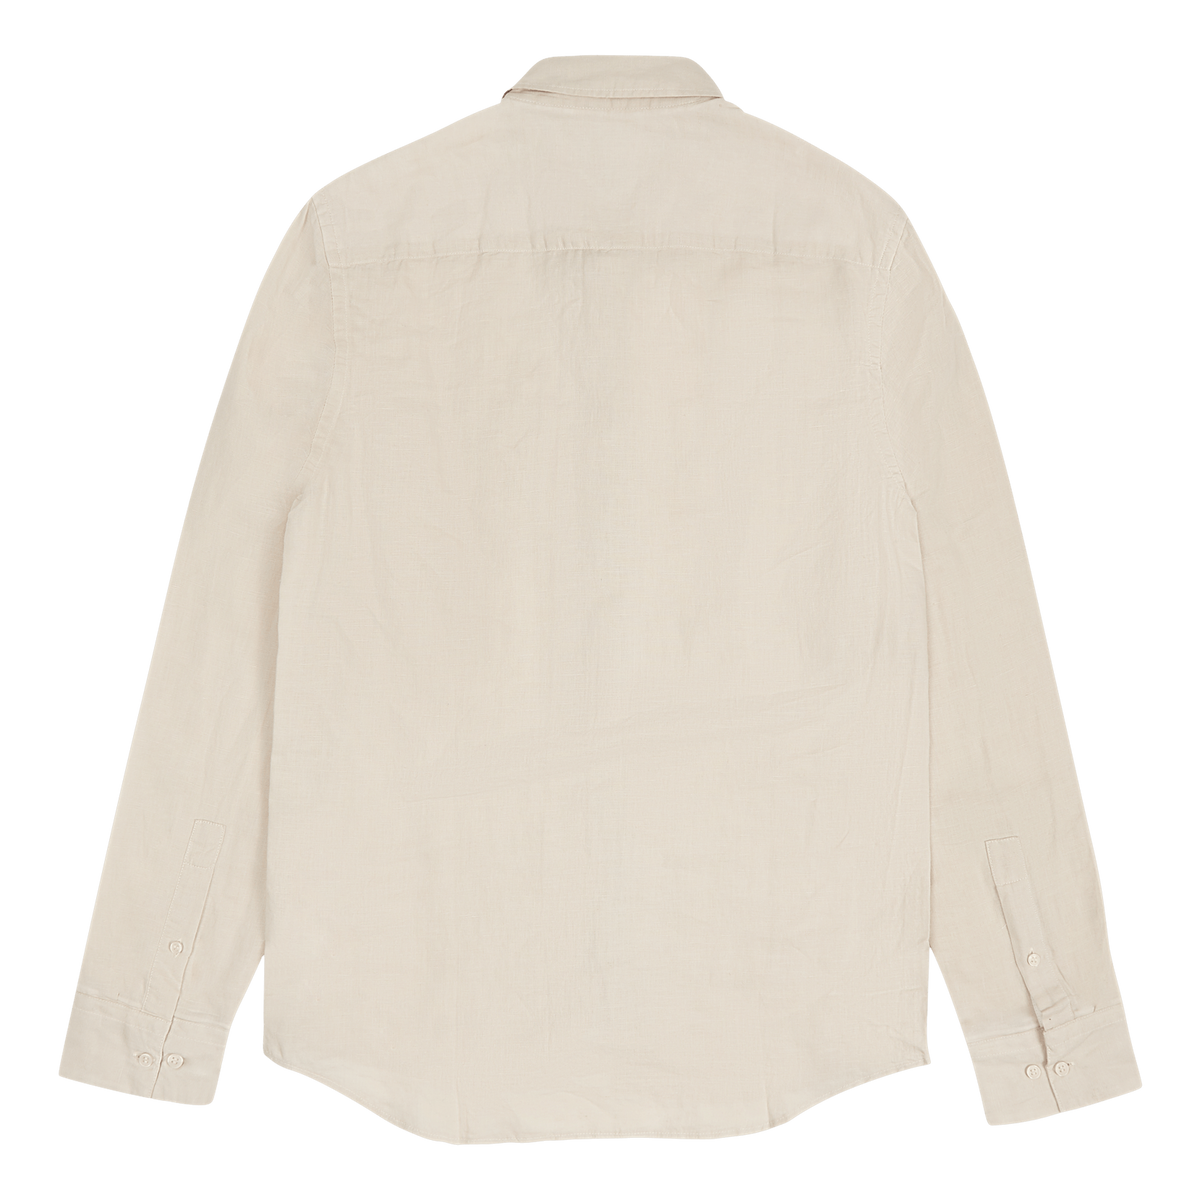 Cotton Linen Chest Pocket Shirt